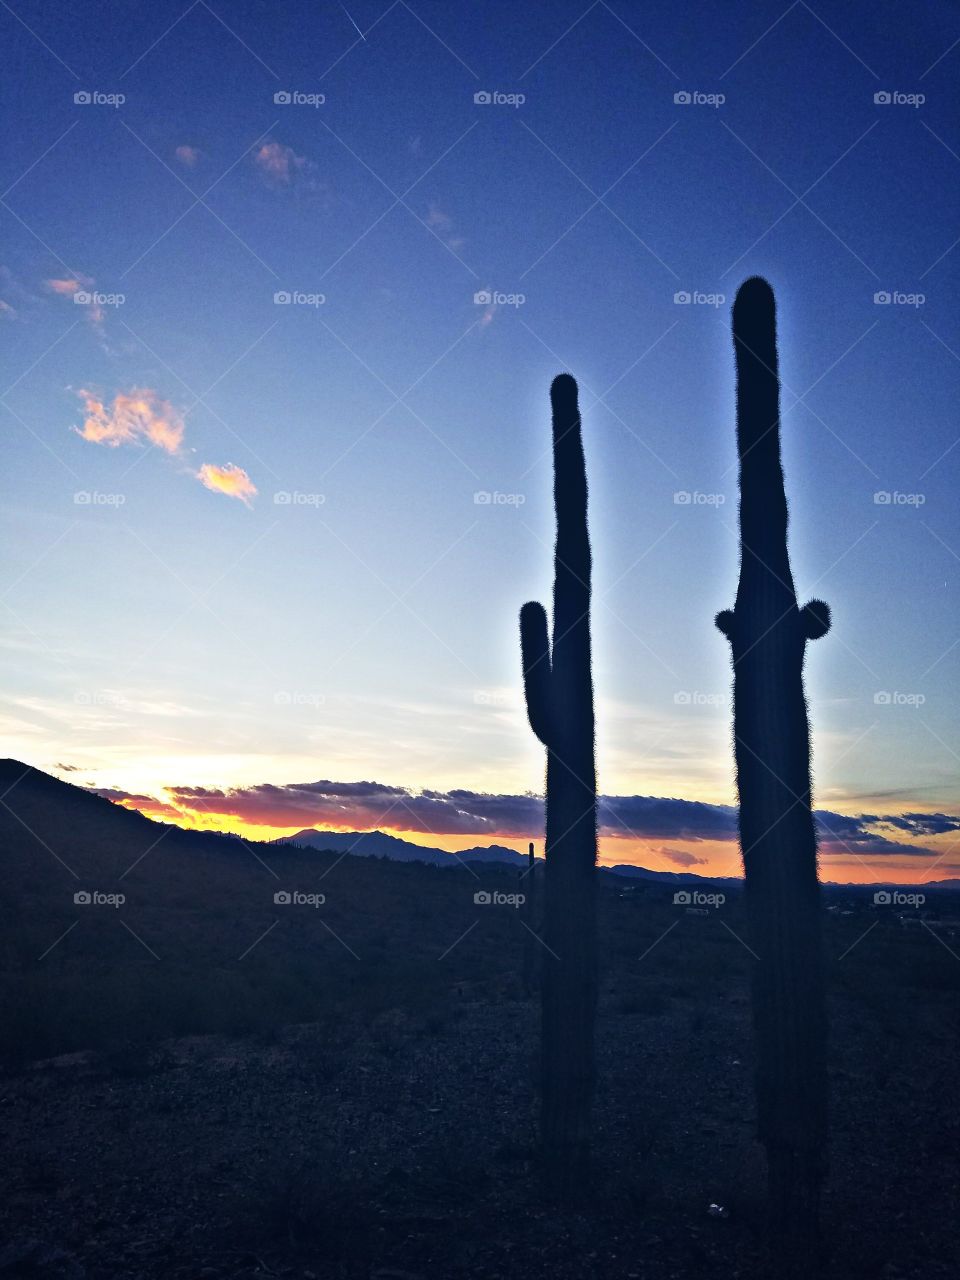 Two cacti just enjoying a beautiful sunset in Phoenix Arizona.